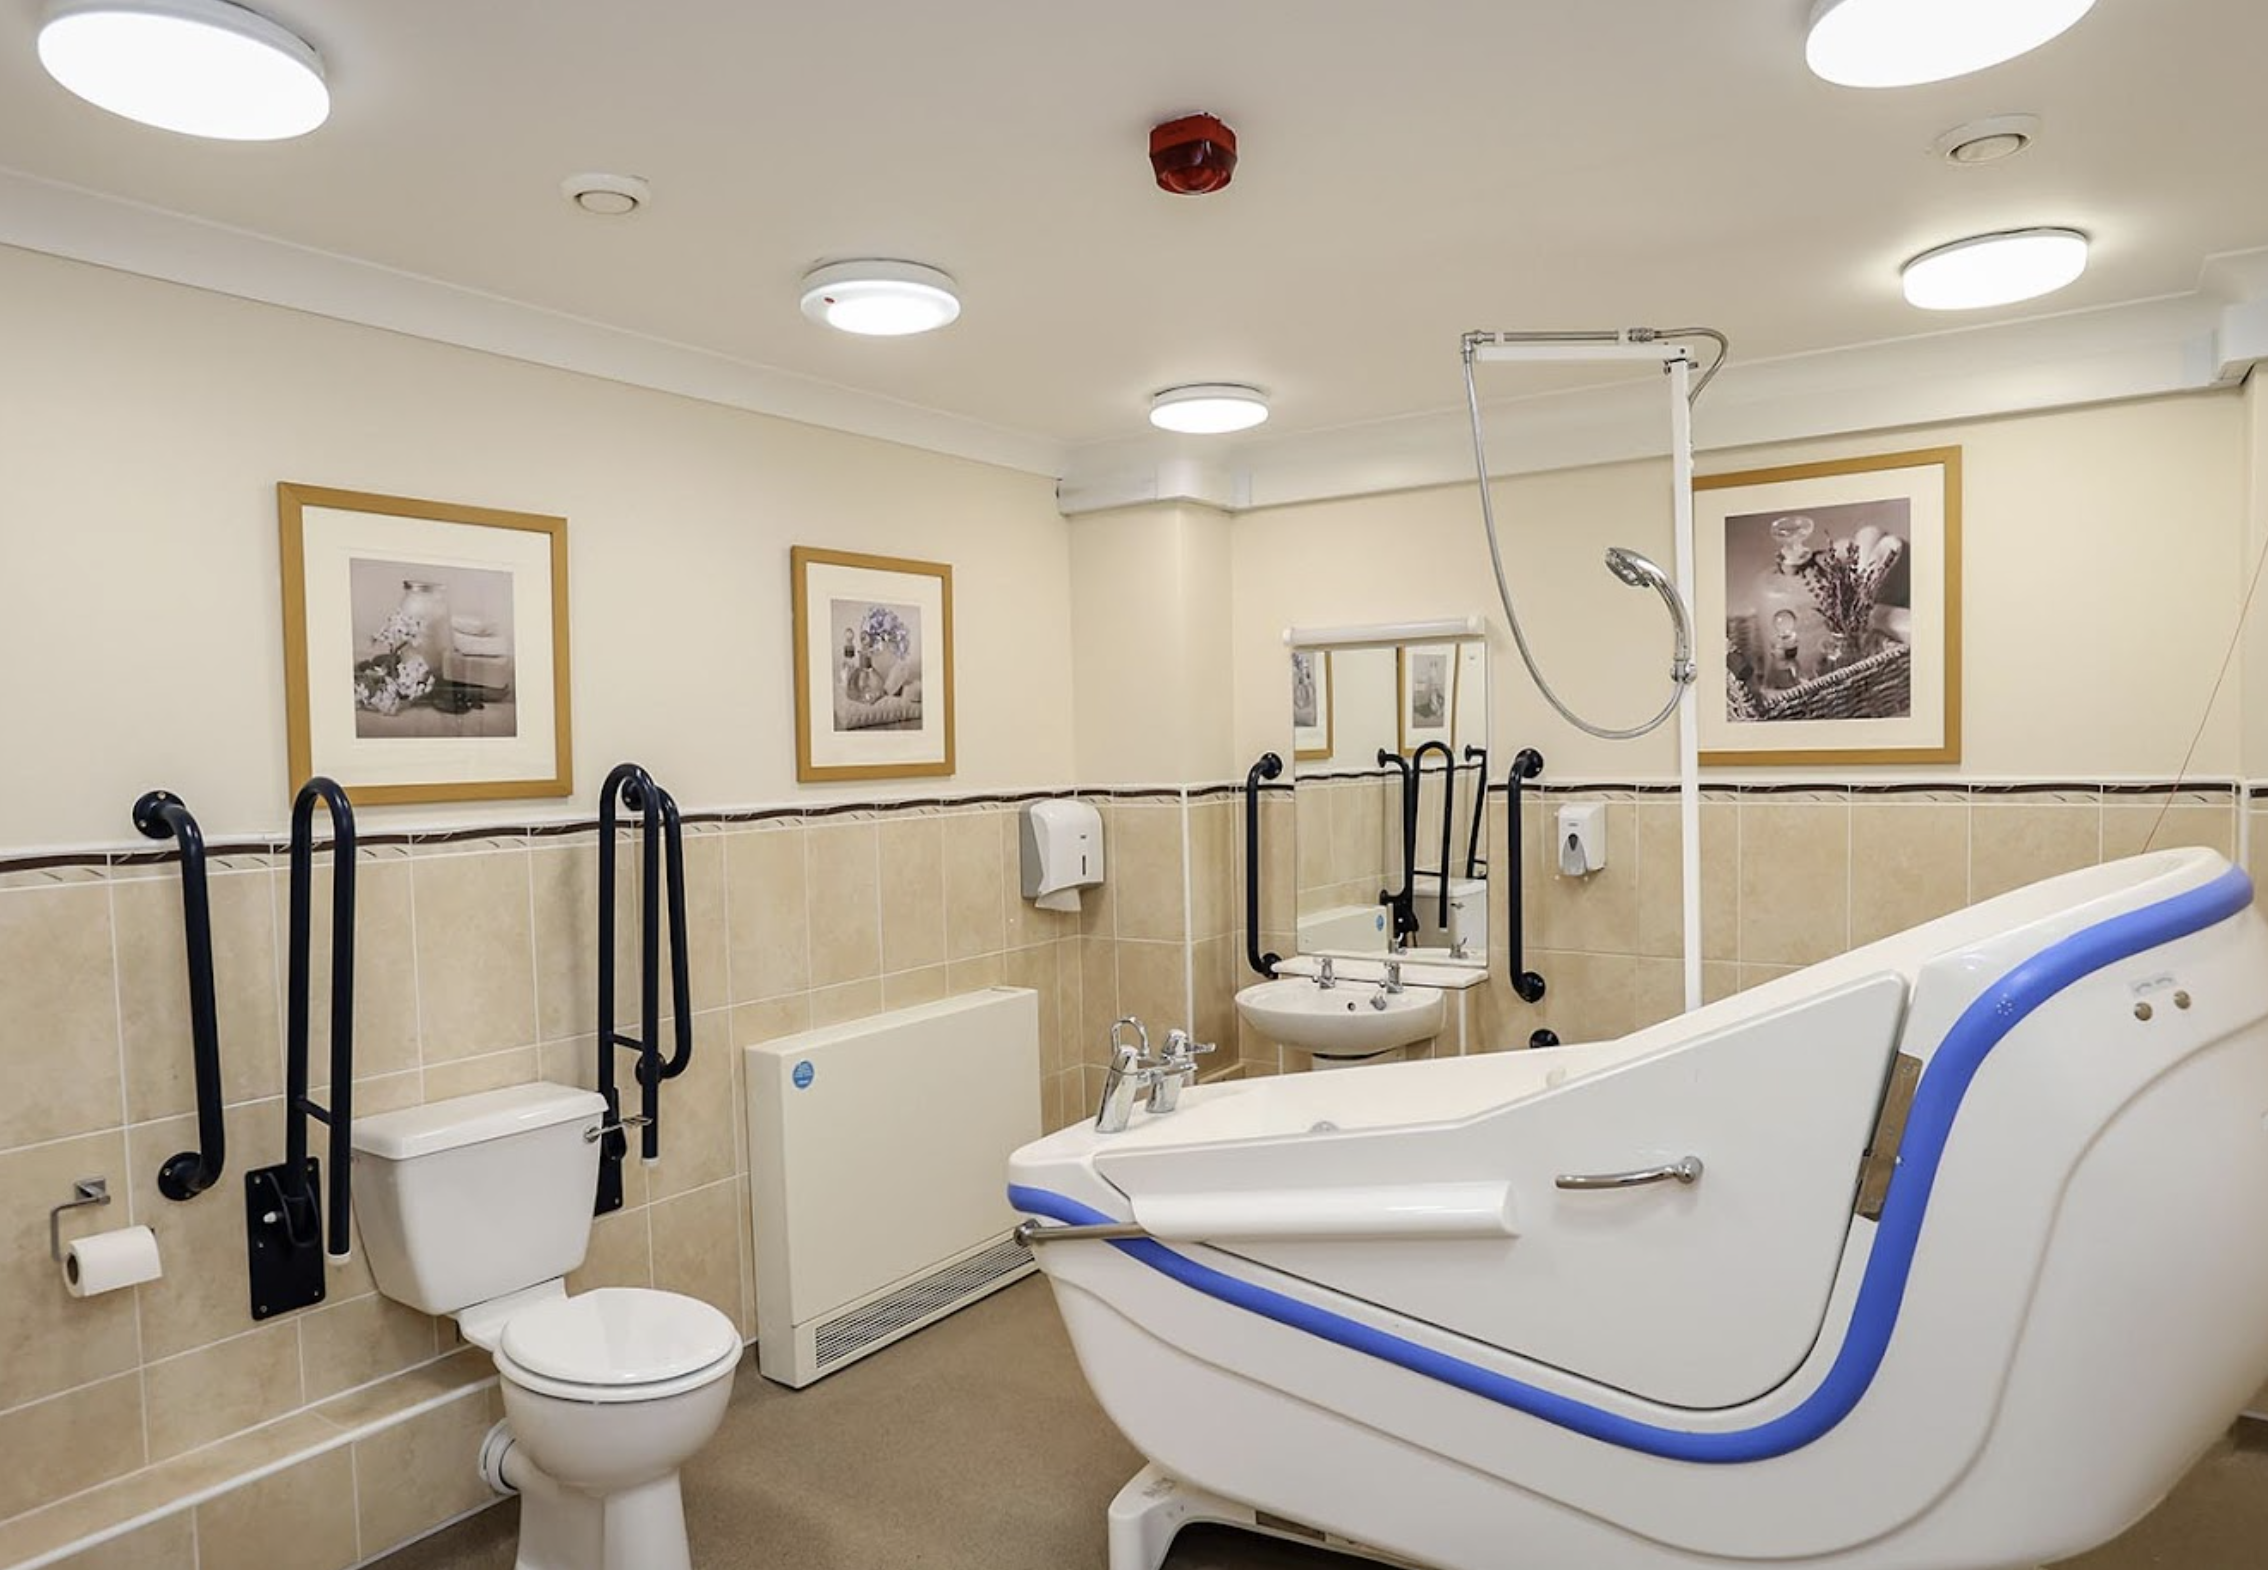 Bathroom of Fern Brook Lodge care home in Gillingham, Dorset